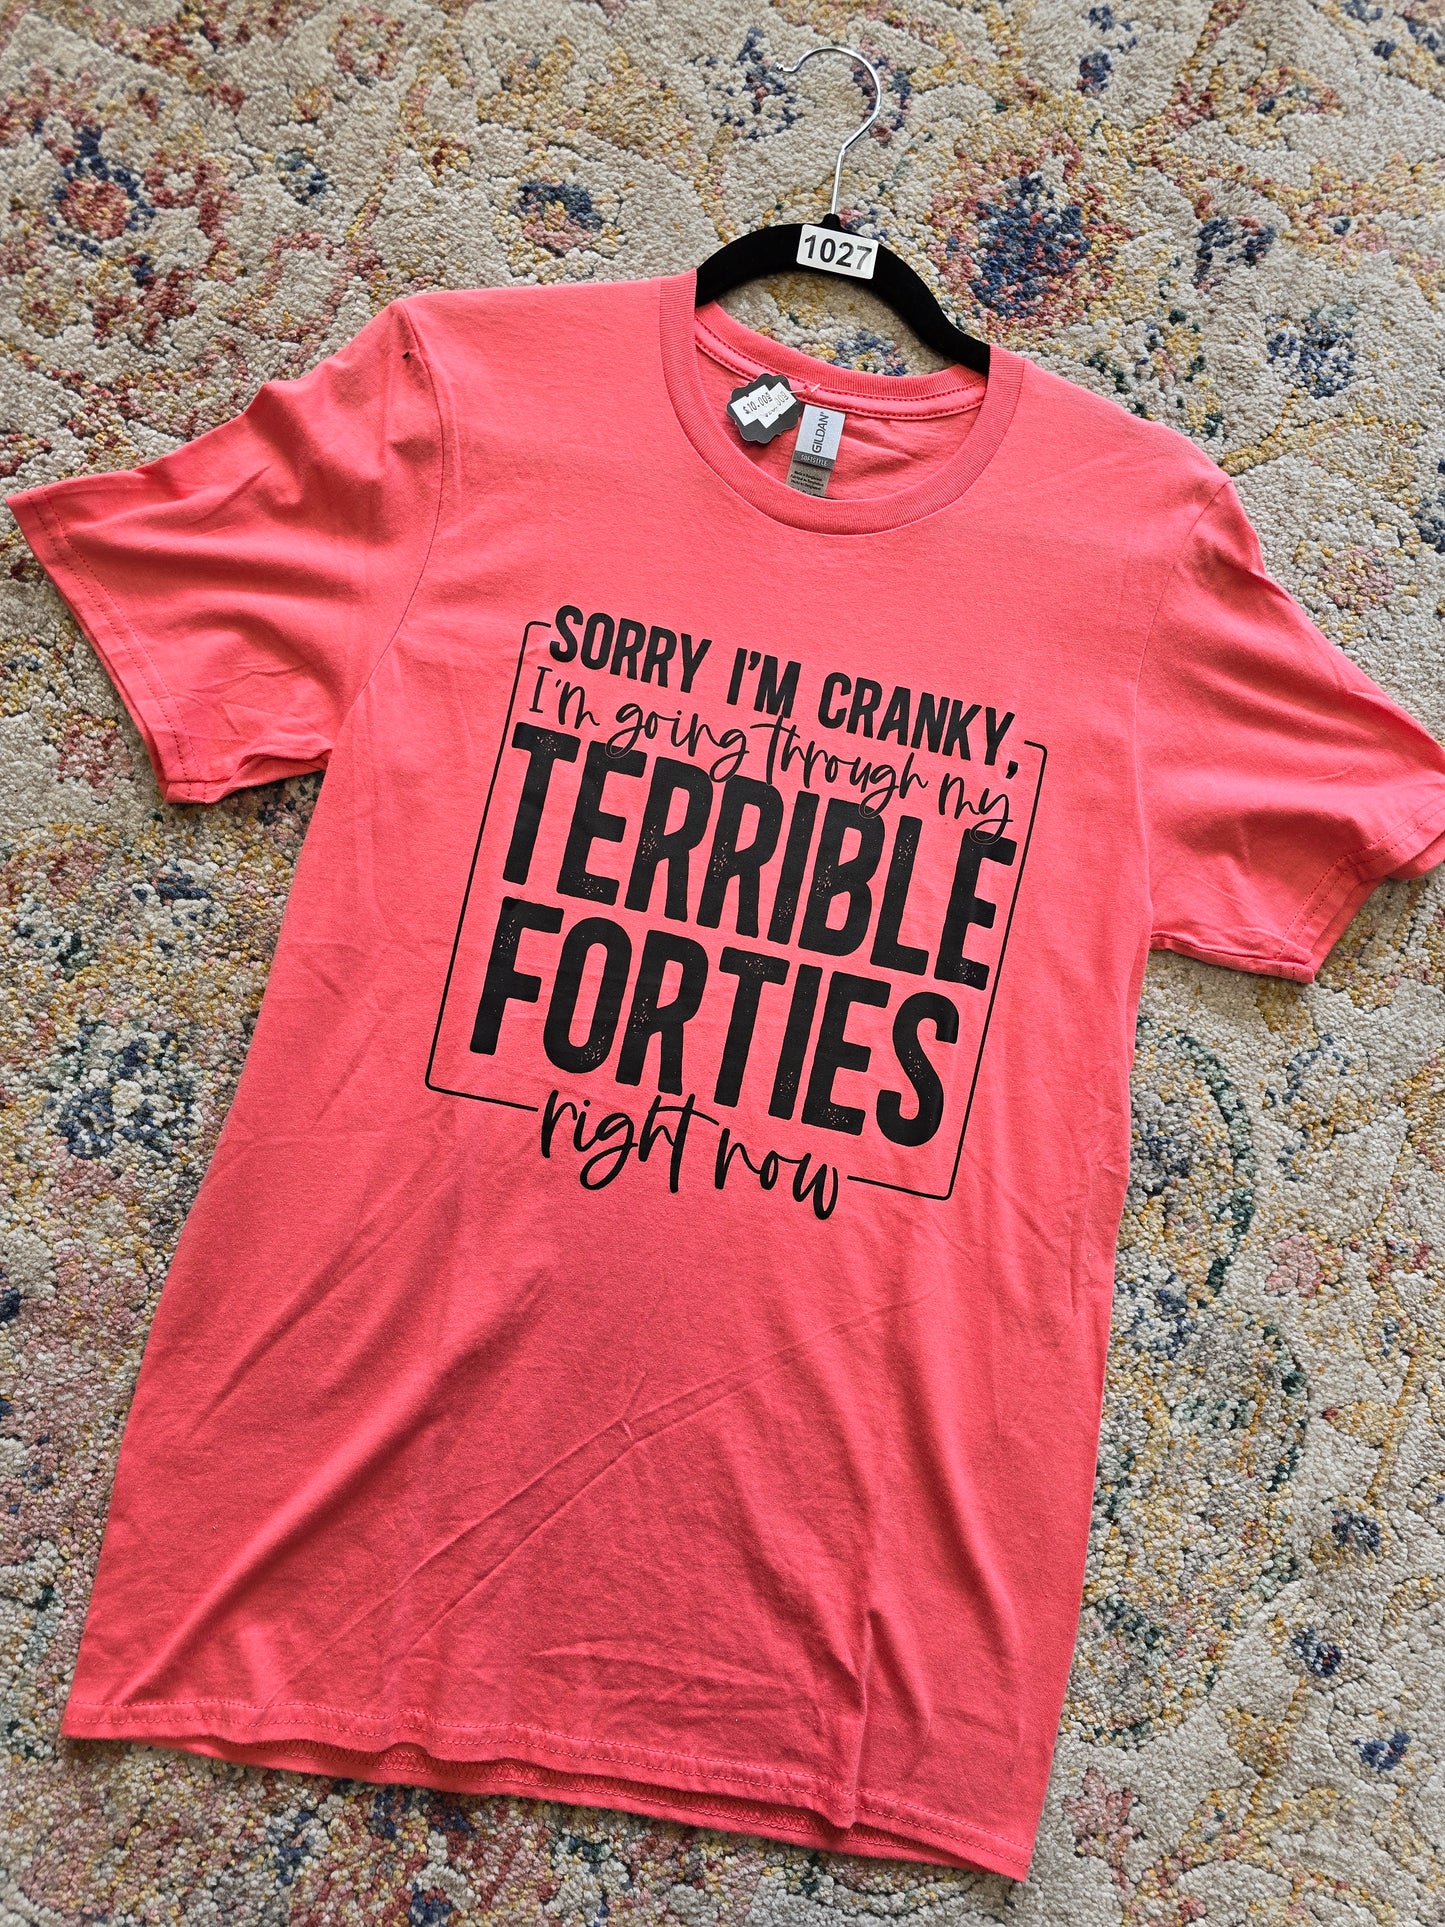 Small $10 t-shirts